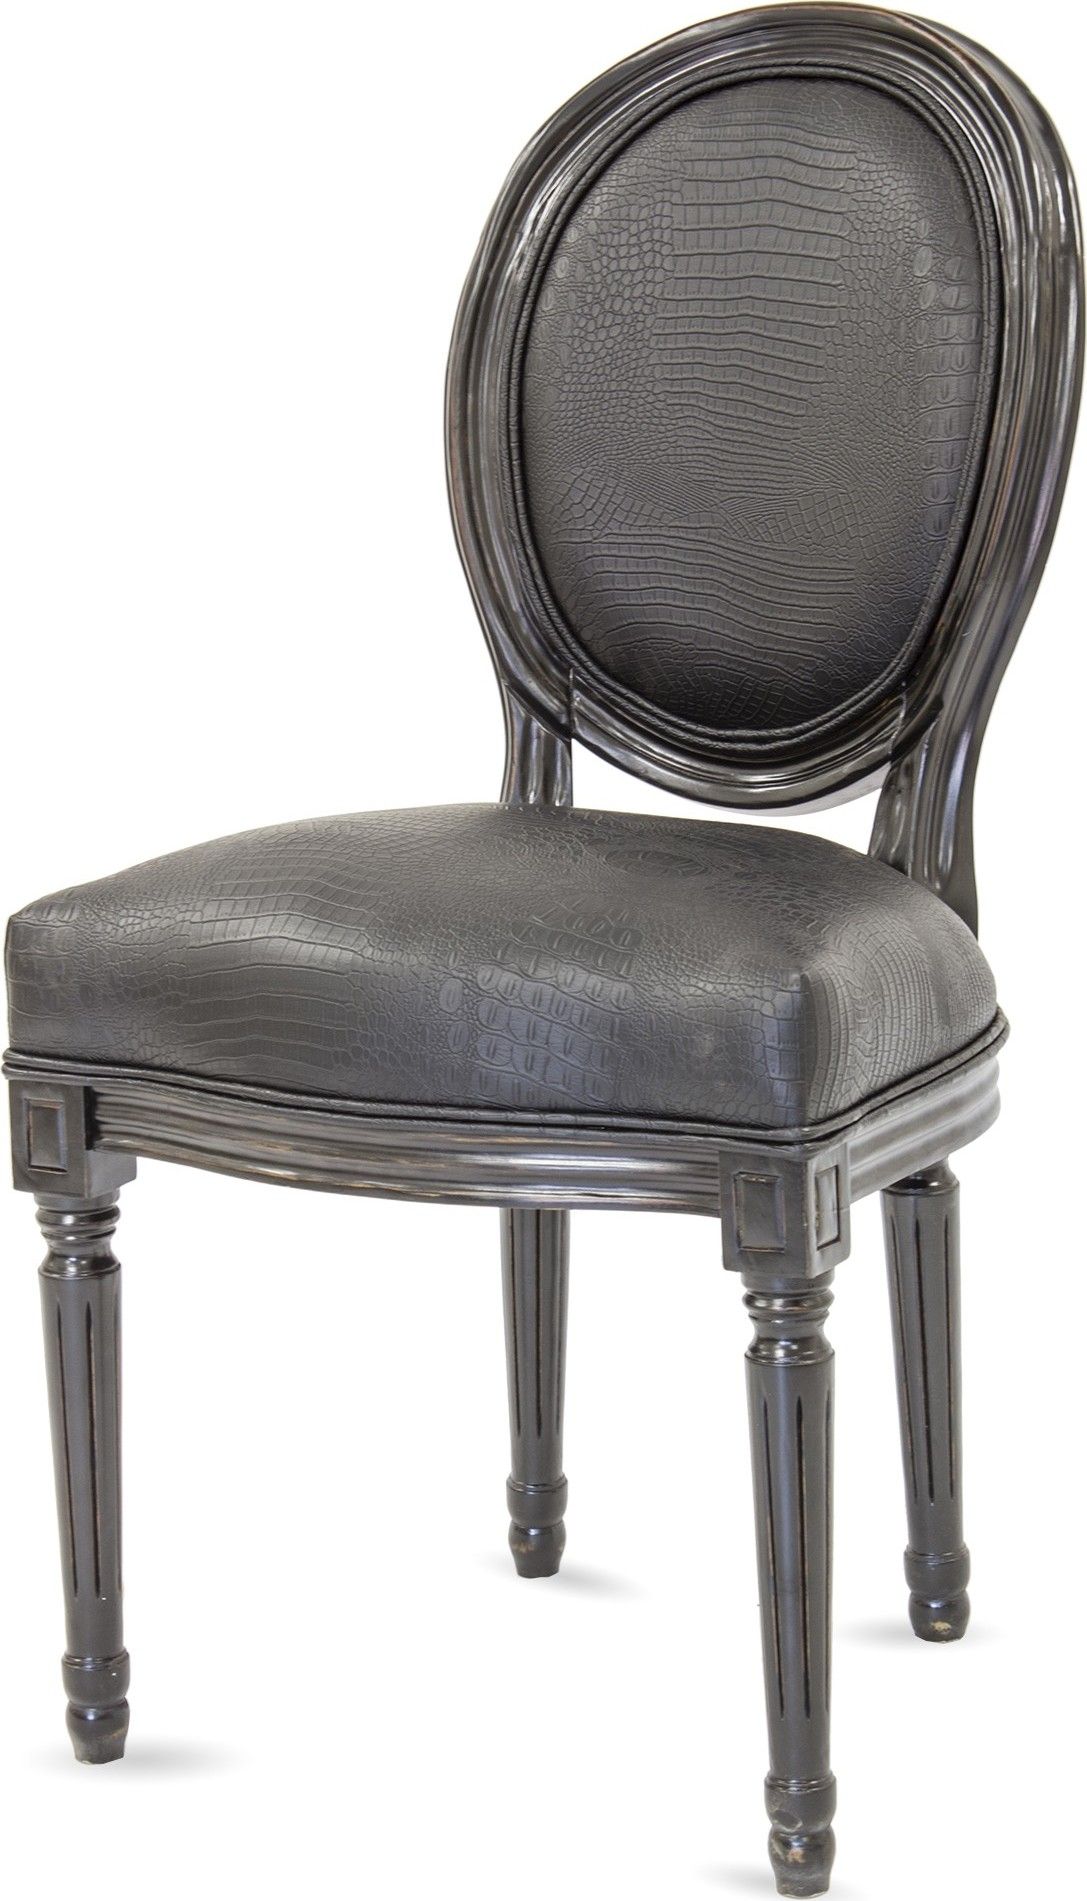 Černá židle s koženkou 55587 Mdum - M DUM.cz